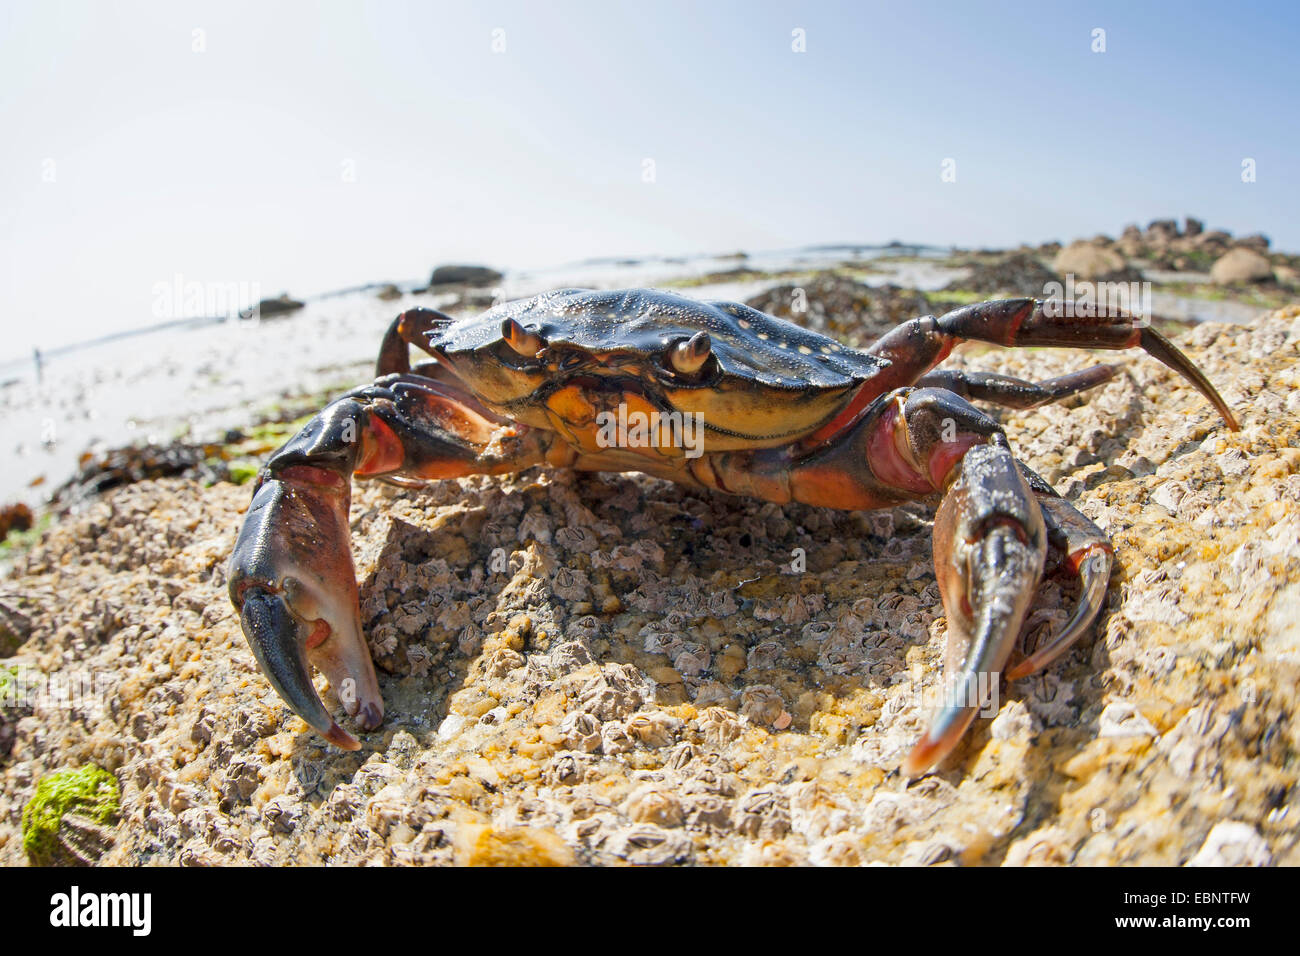 Green shore crab, Green crab, North Atlantic shore crab (Carcinus maenas), at the sea shore, Germany Stock Photo